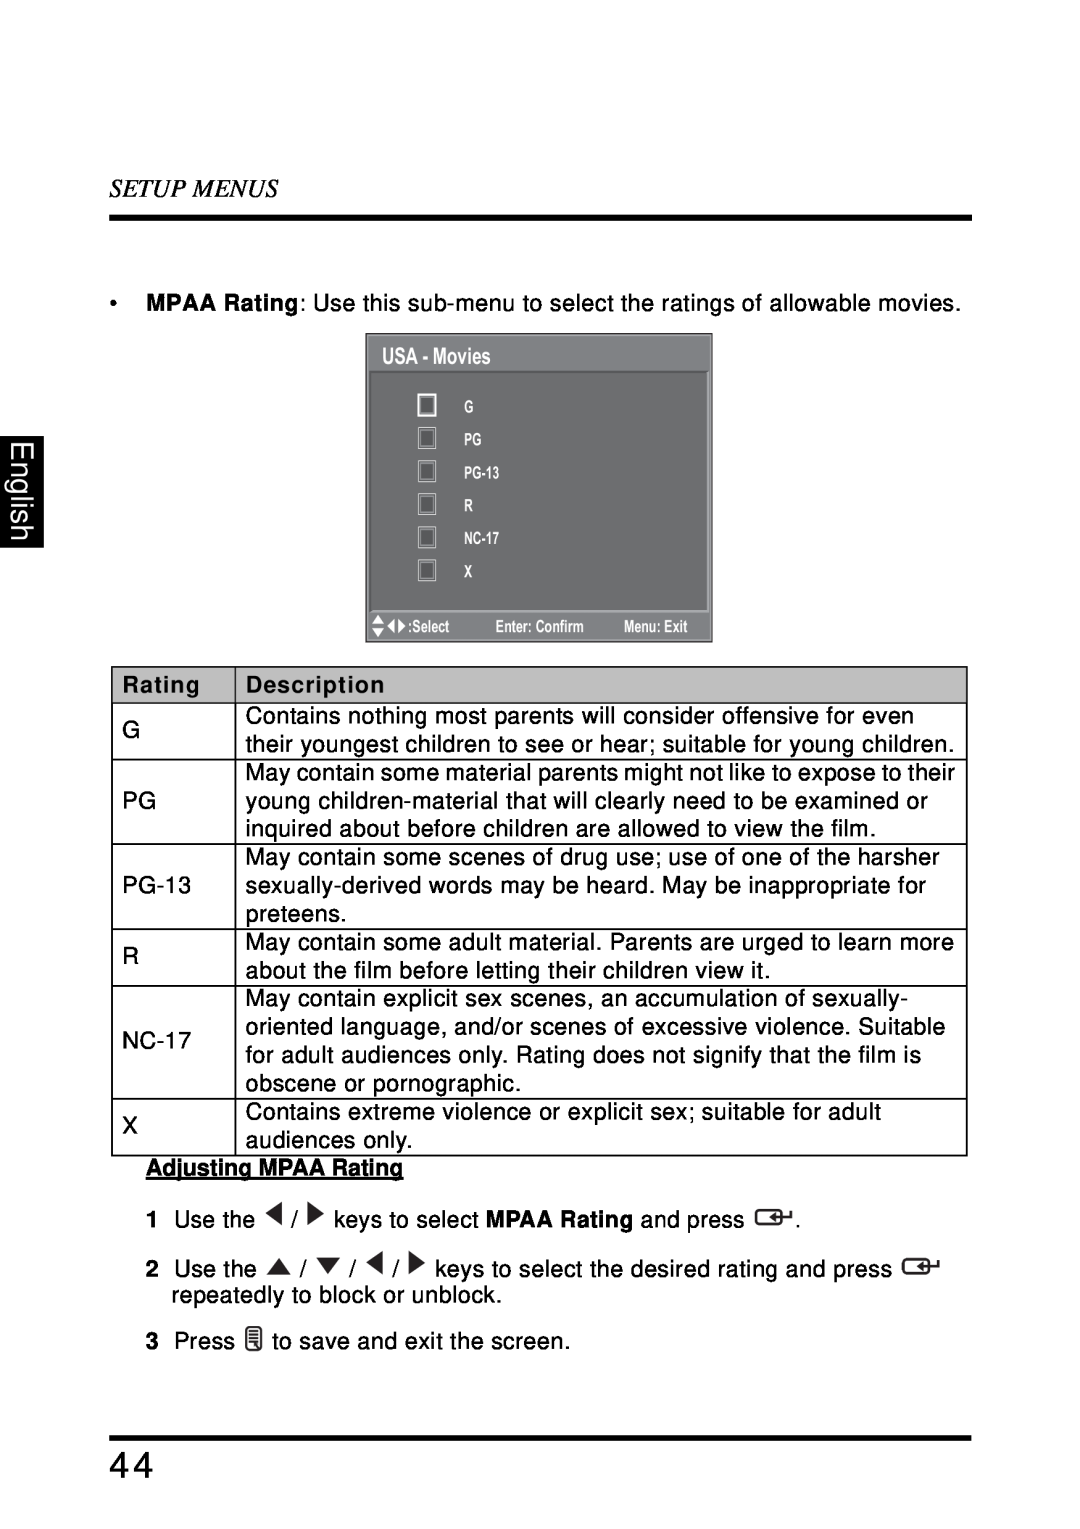 Westinghouse SK-32H640G user manual English, Setup Menus, USA - Movies, Description, Adjusting MPAA Rating 